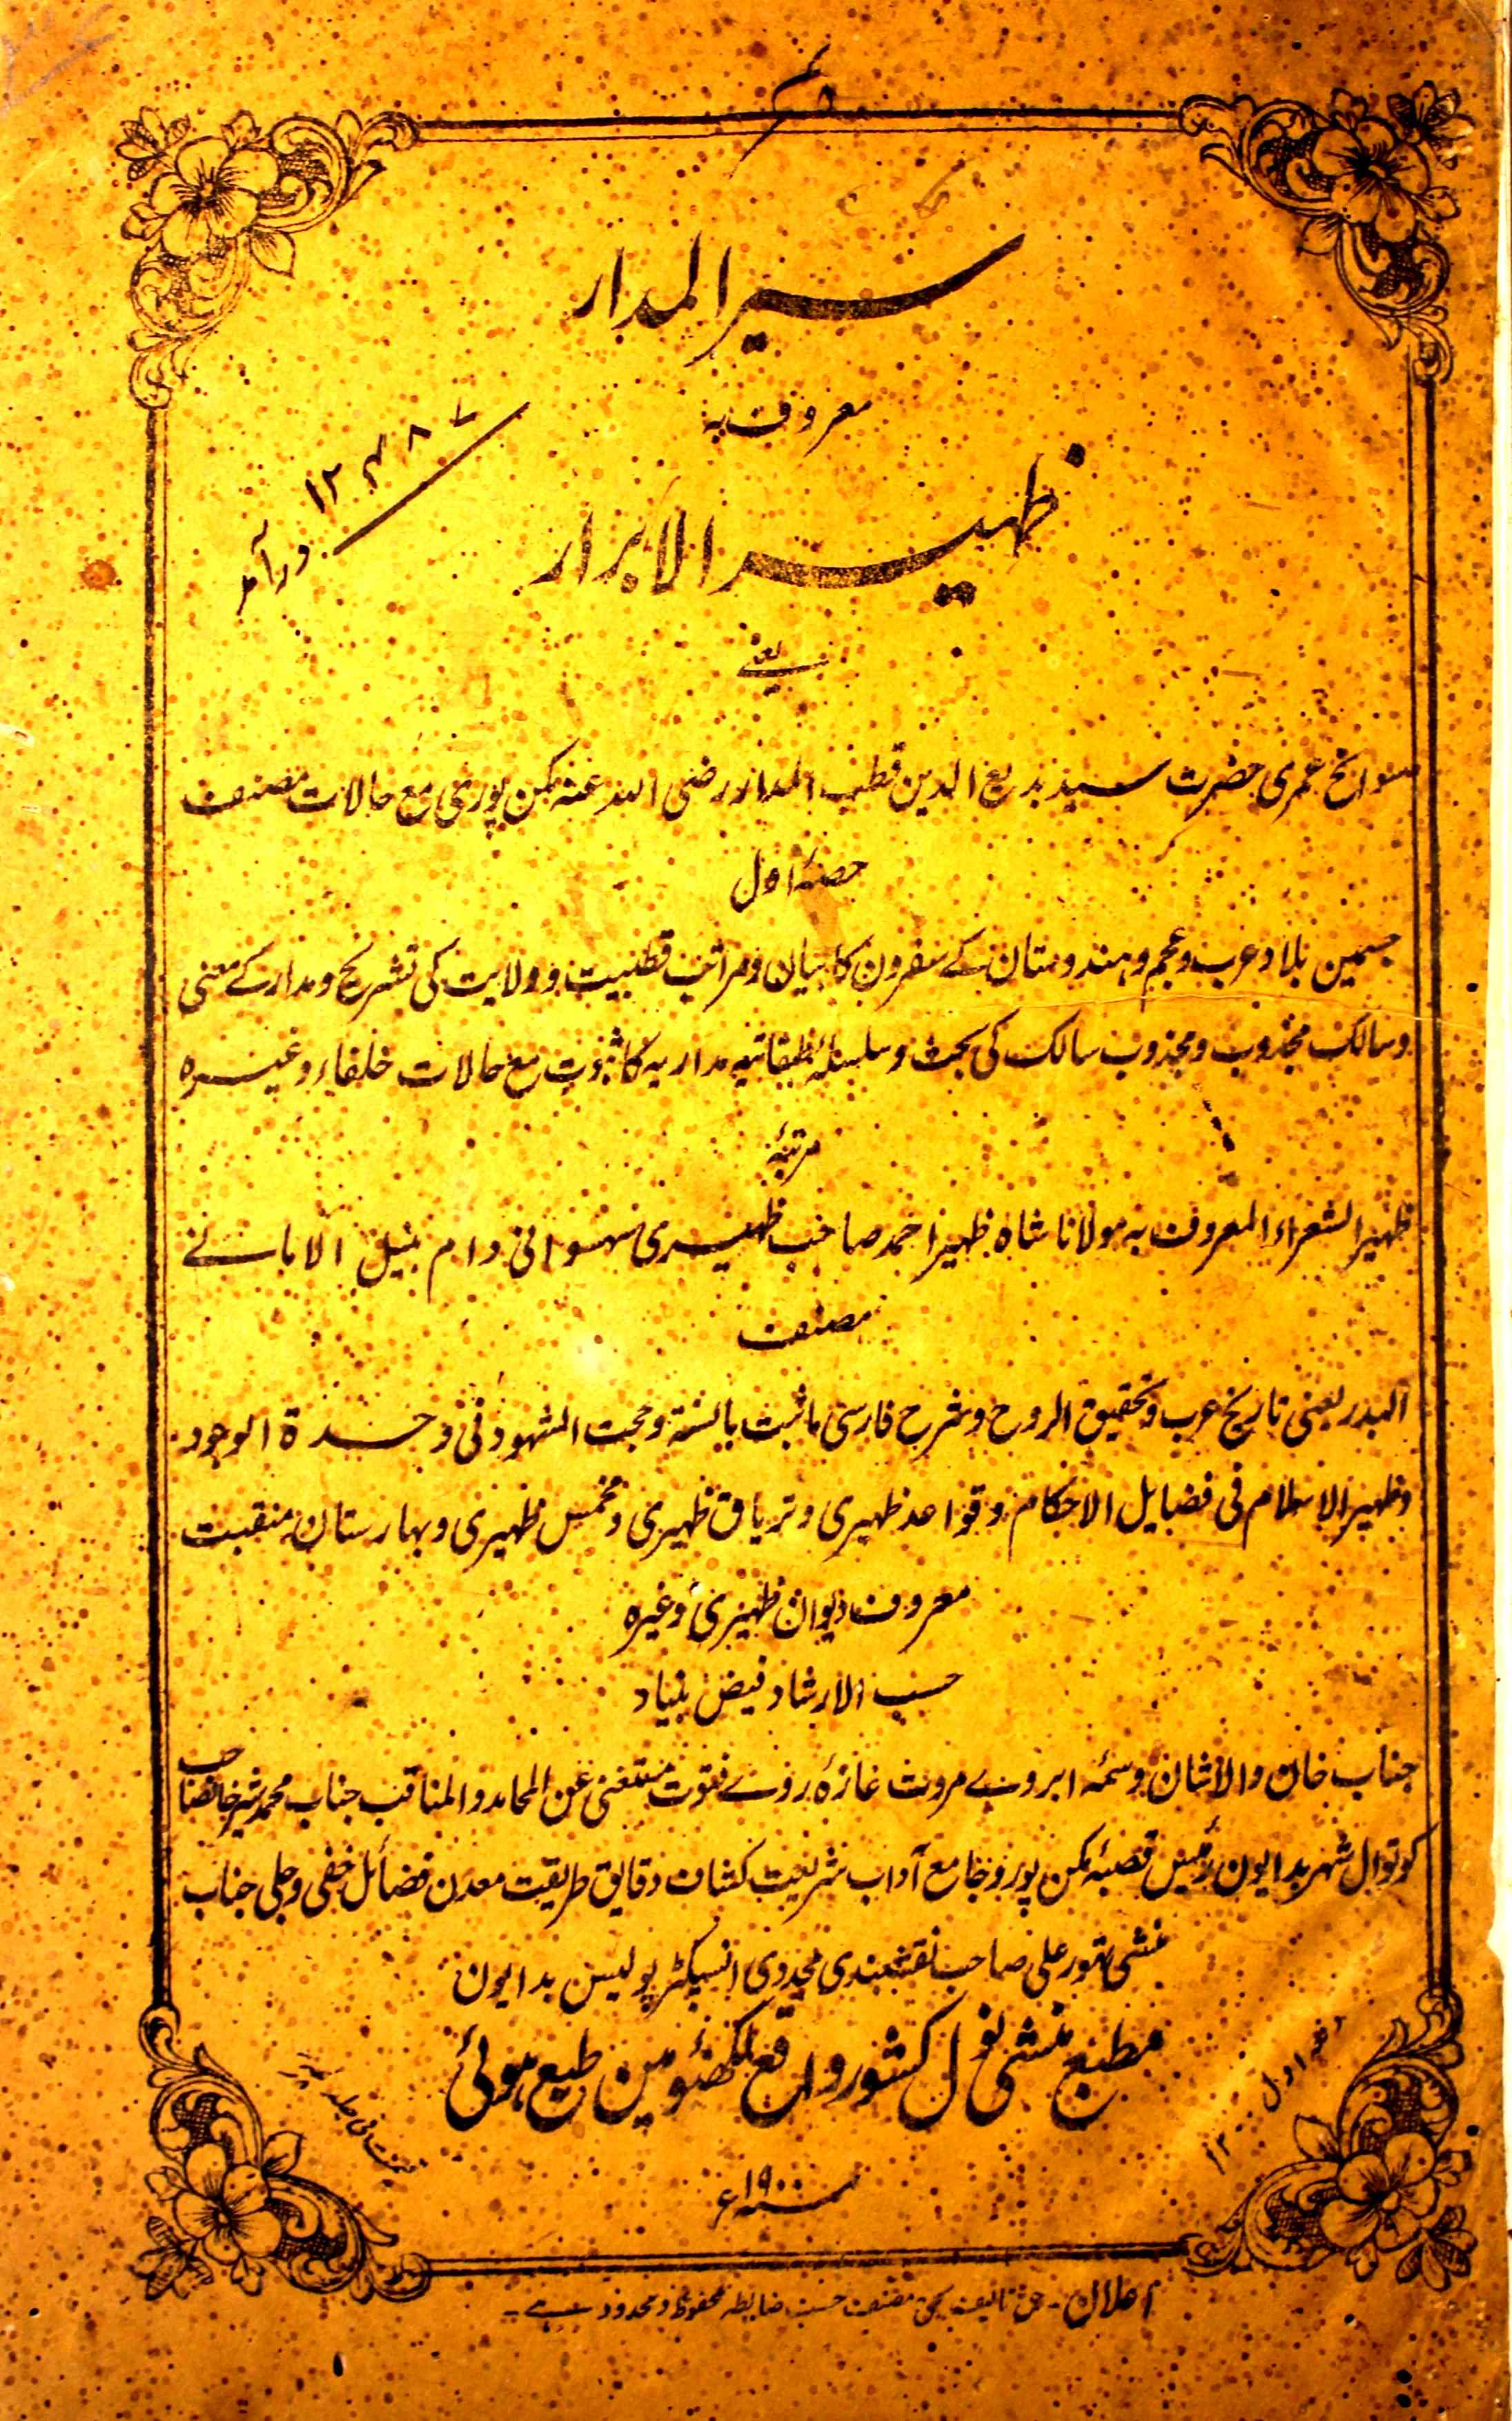 Zaheer-ul-Abrar